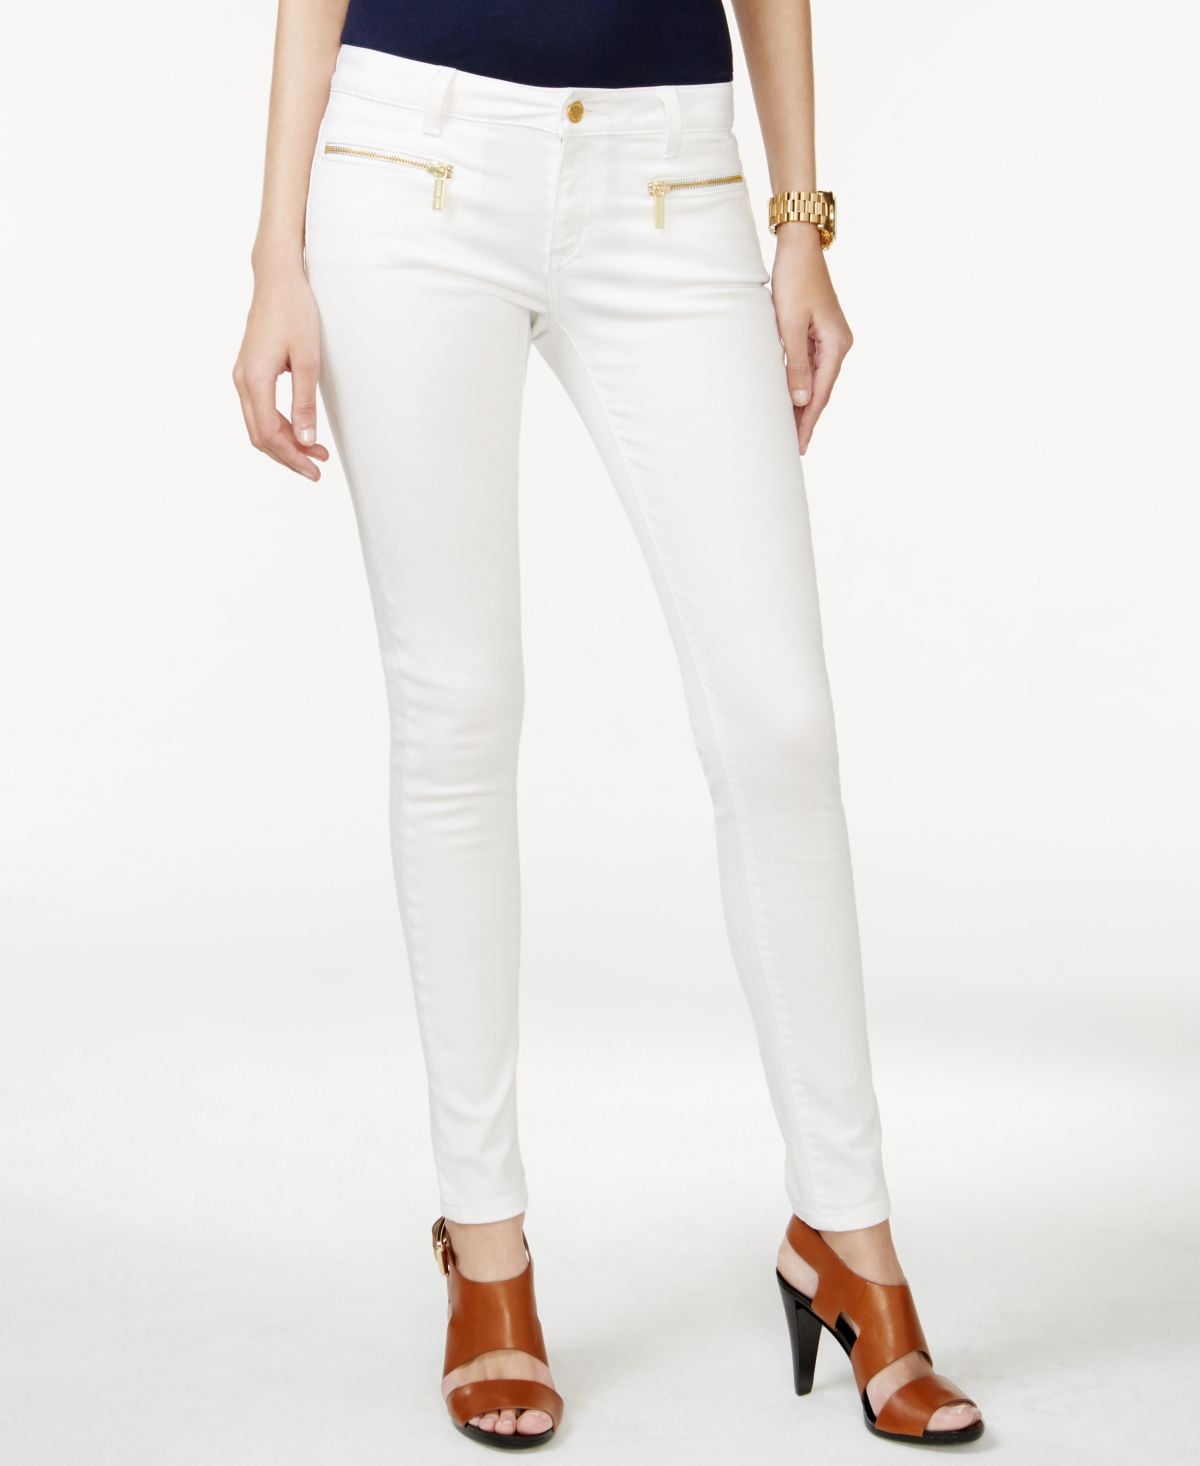 michael kors white jeans